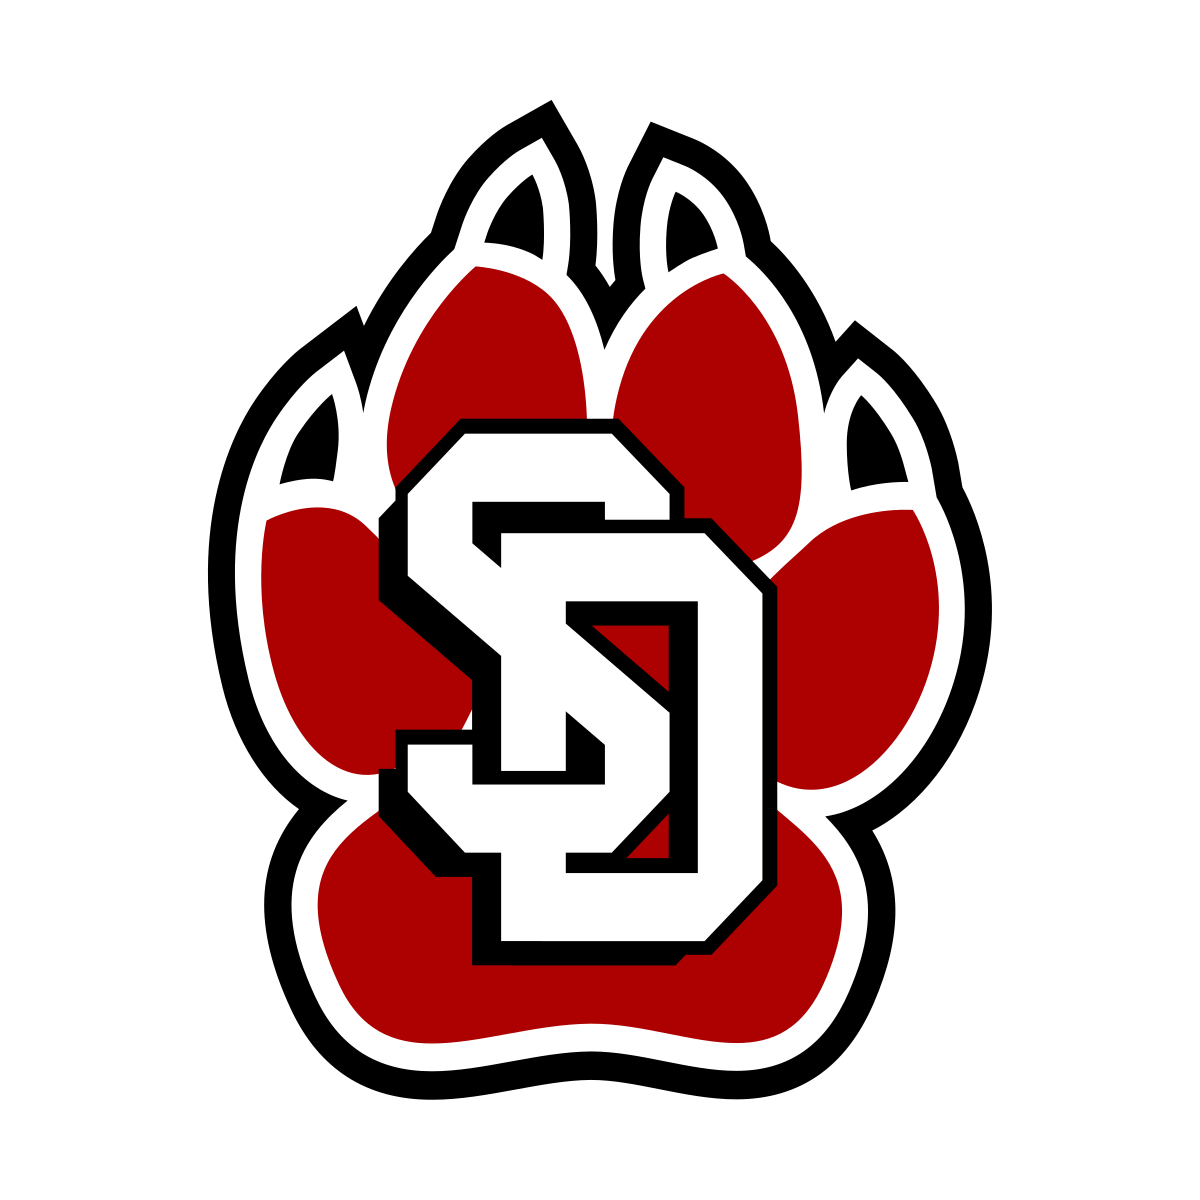 South Dakota Coyotes logo PNG